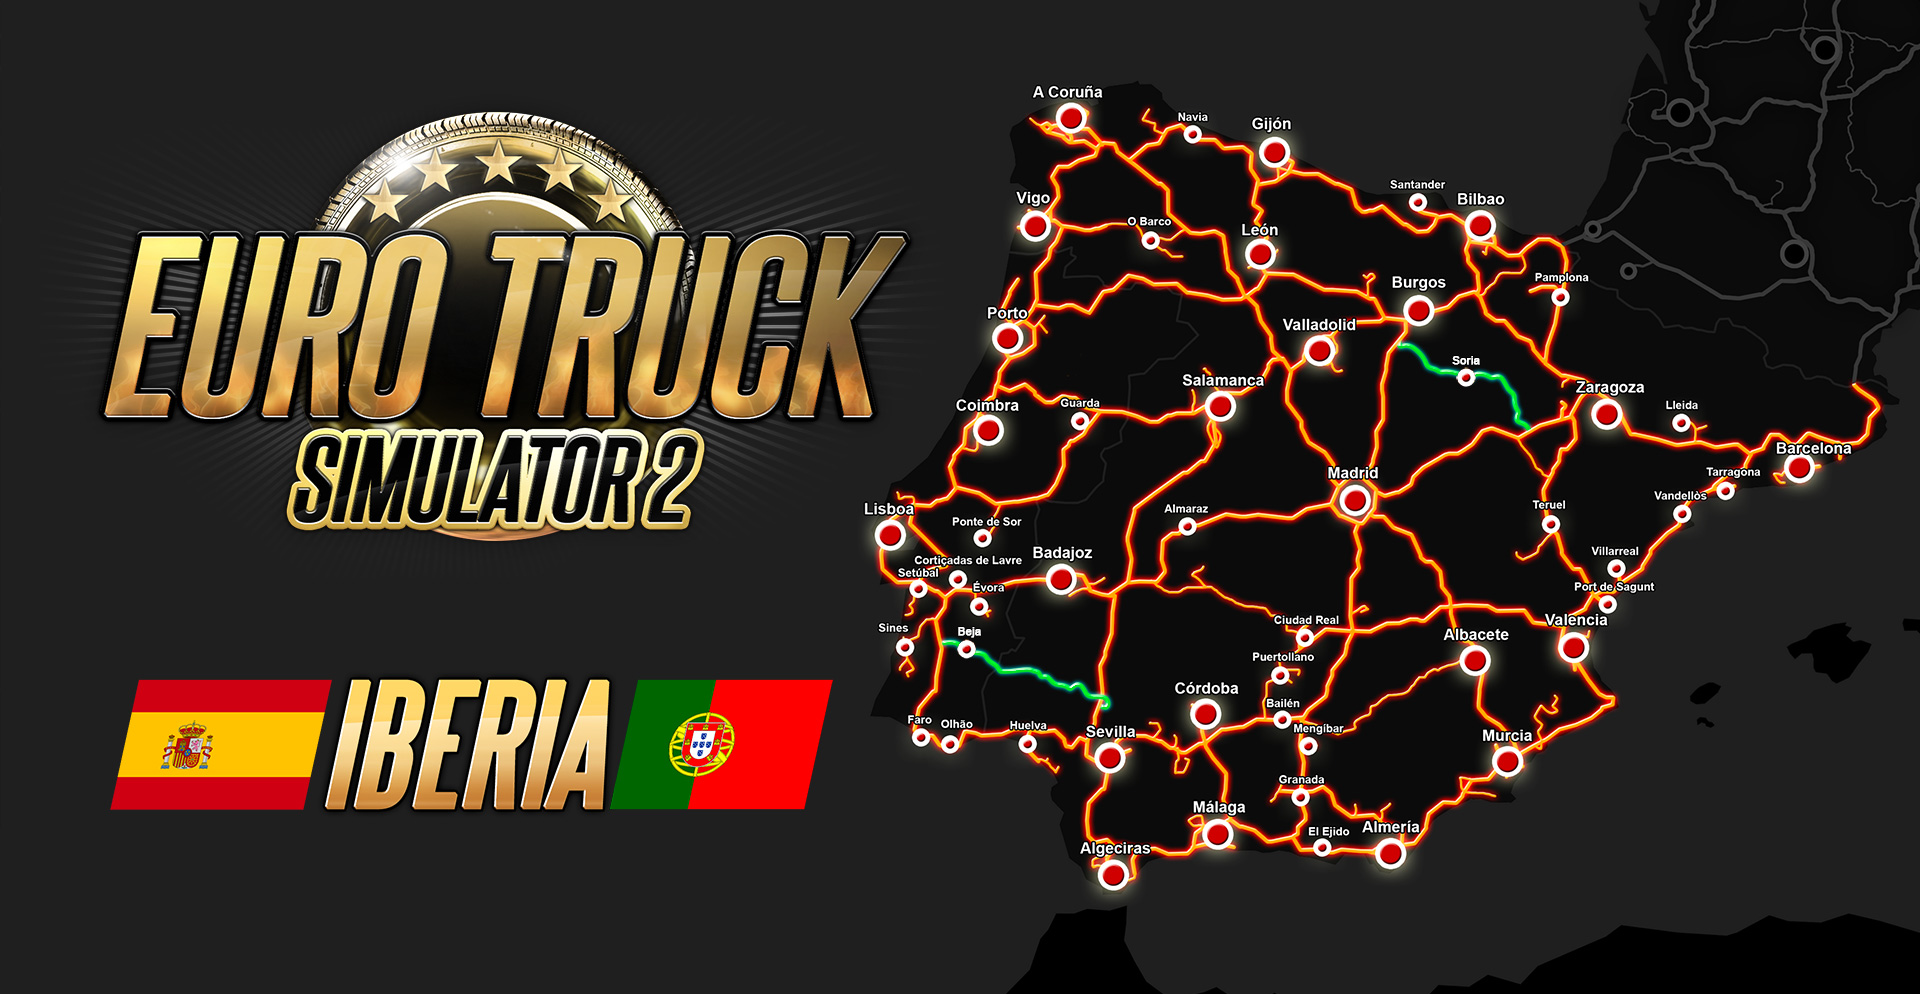 Euro Truck Simulator 2 Iberia Truck Simulator Wiki Fandom